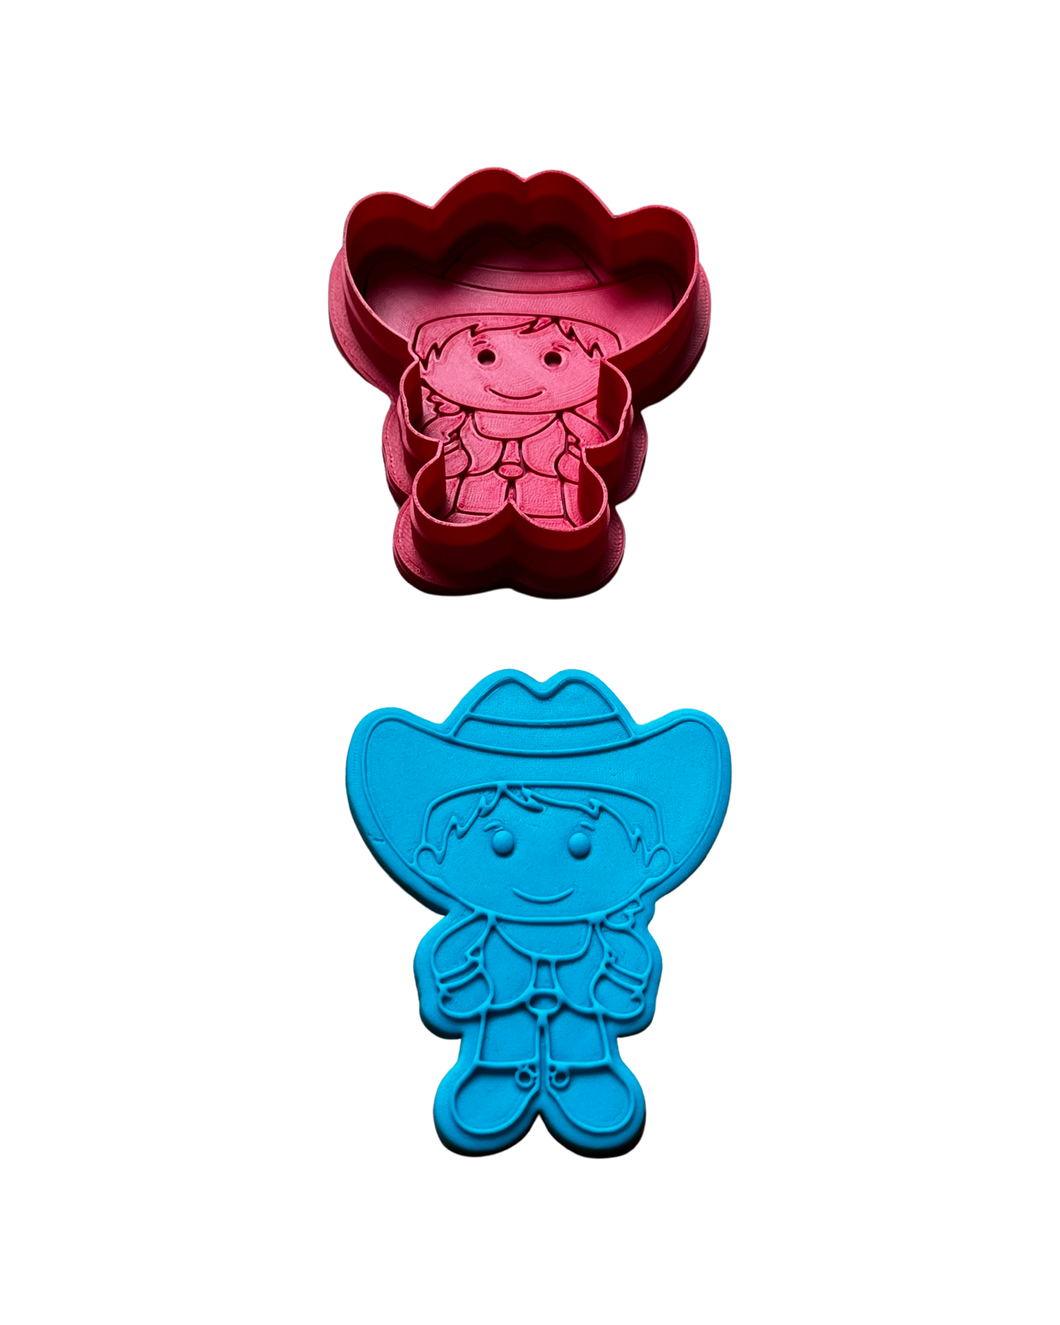 Cowboy Cookie Cutter cute west theme